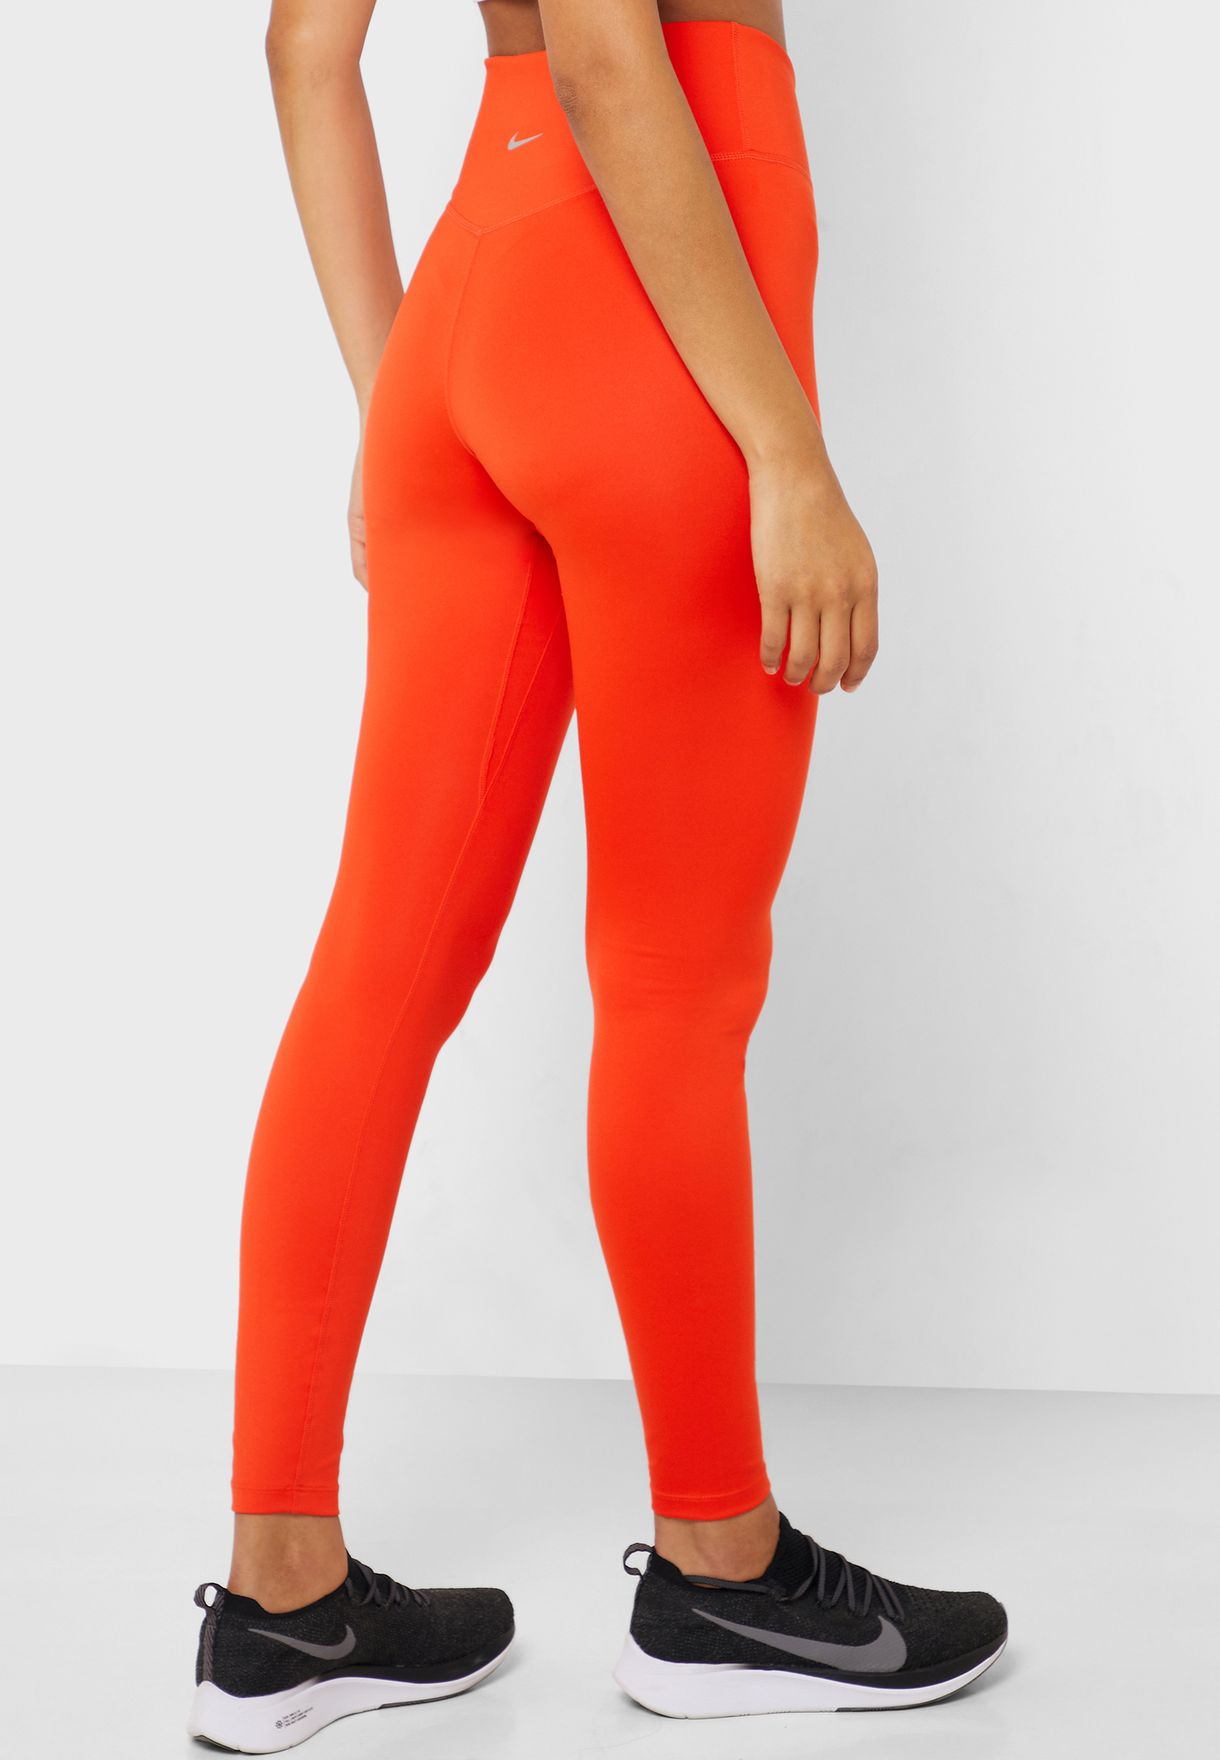 nike orange leggings womens